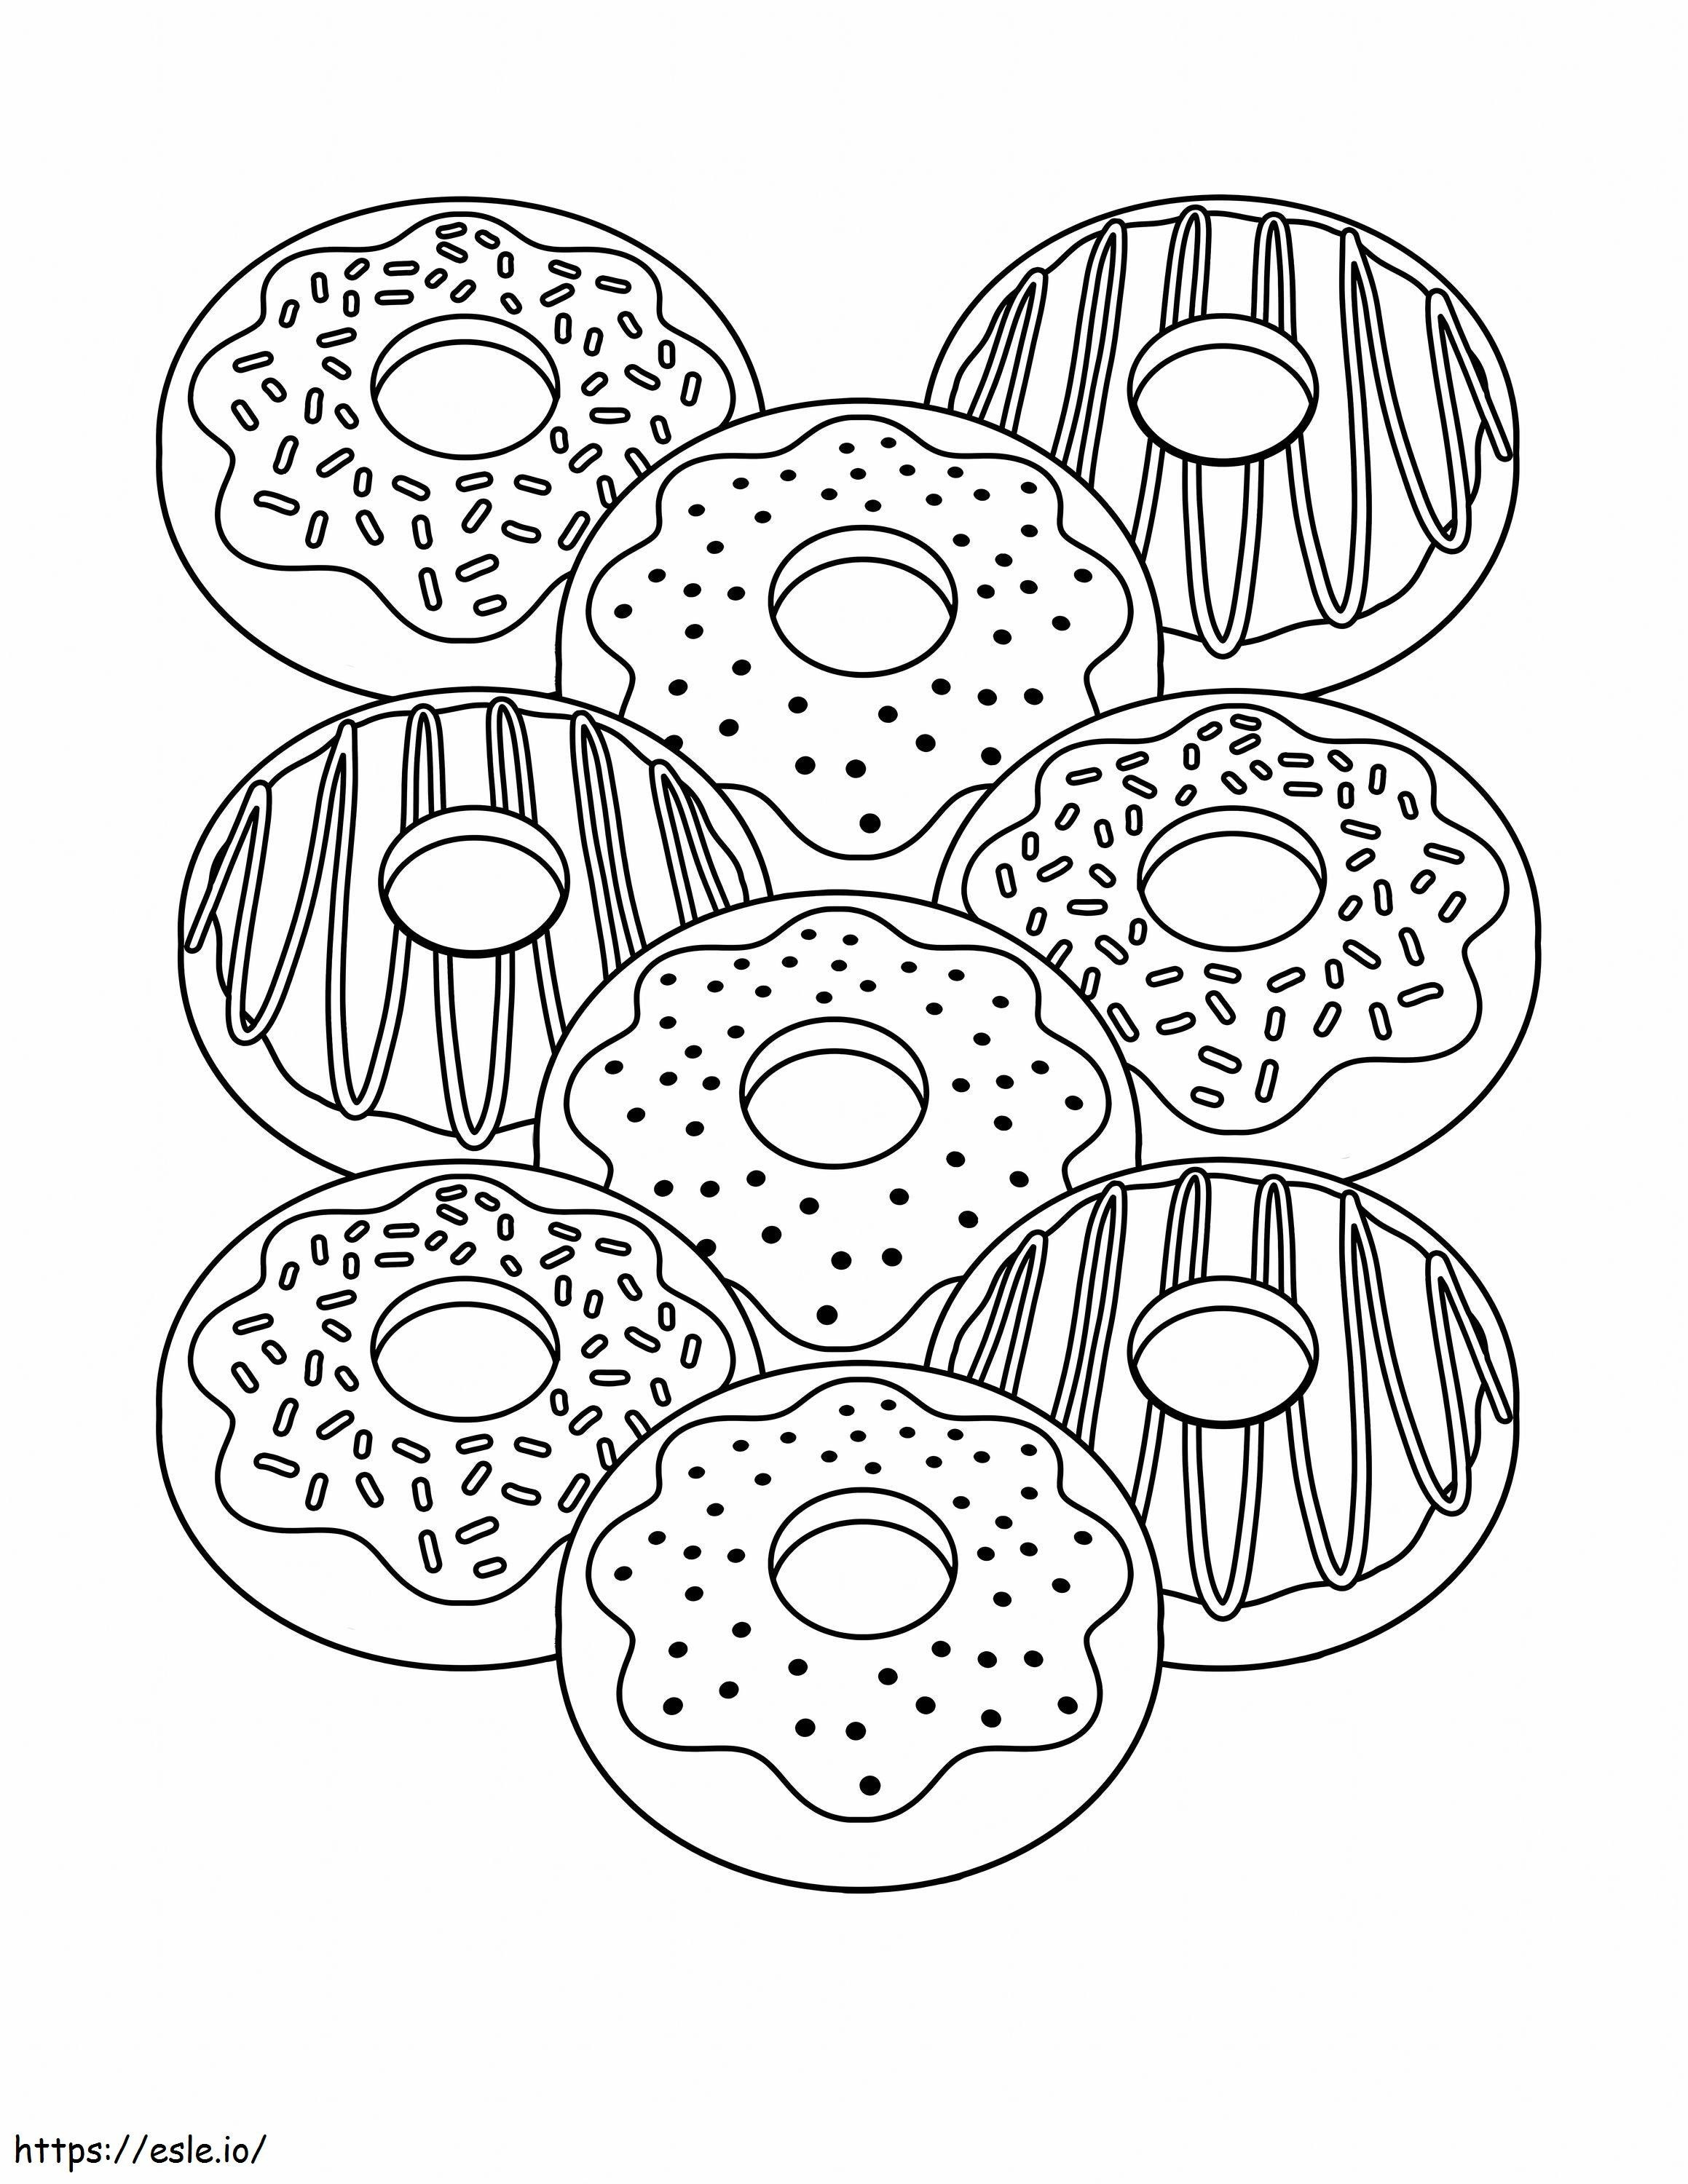 Neun schuppige Donuts ausmalbilder